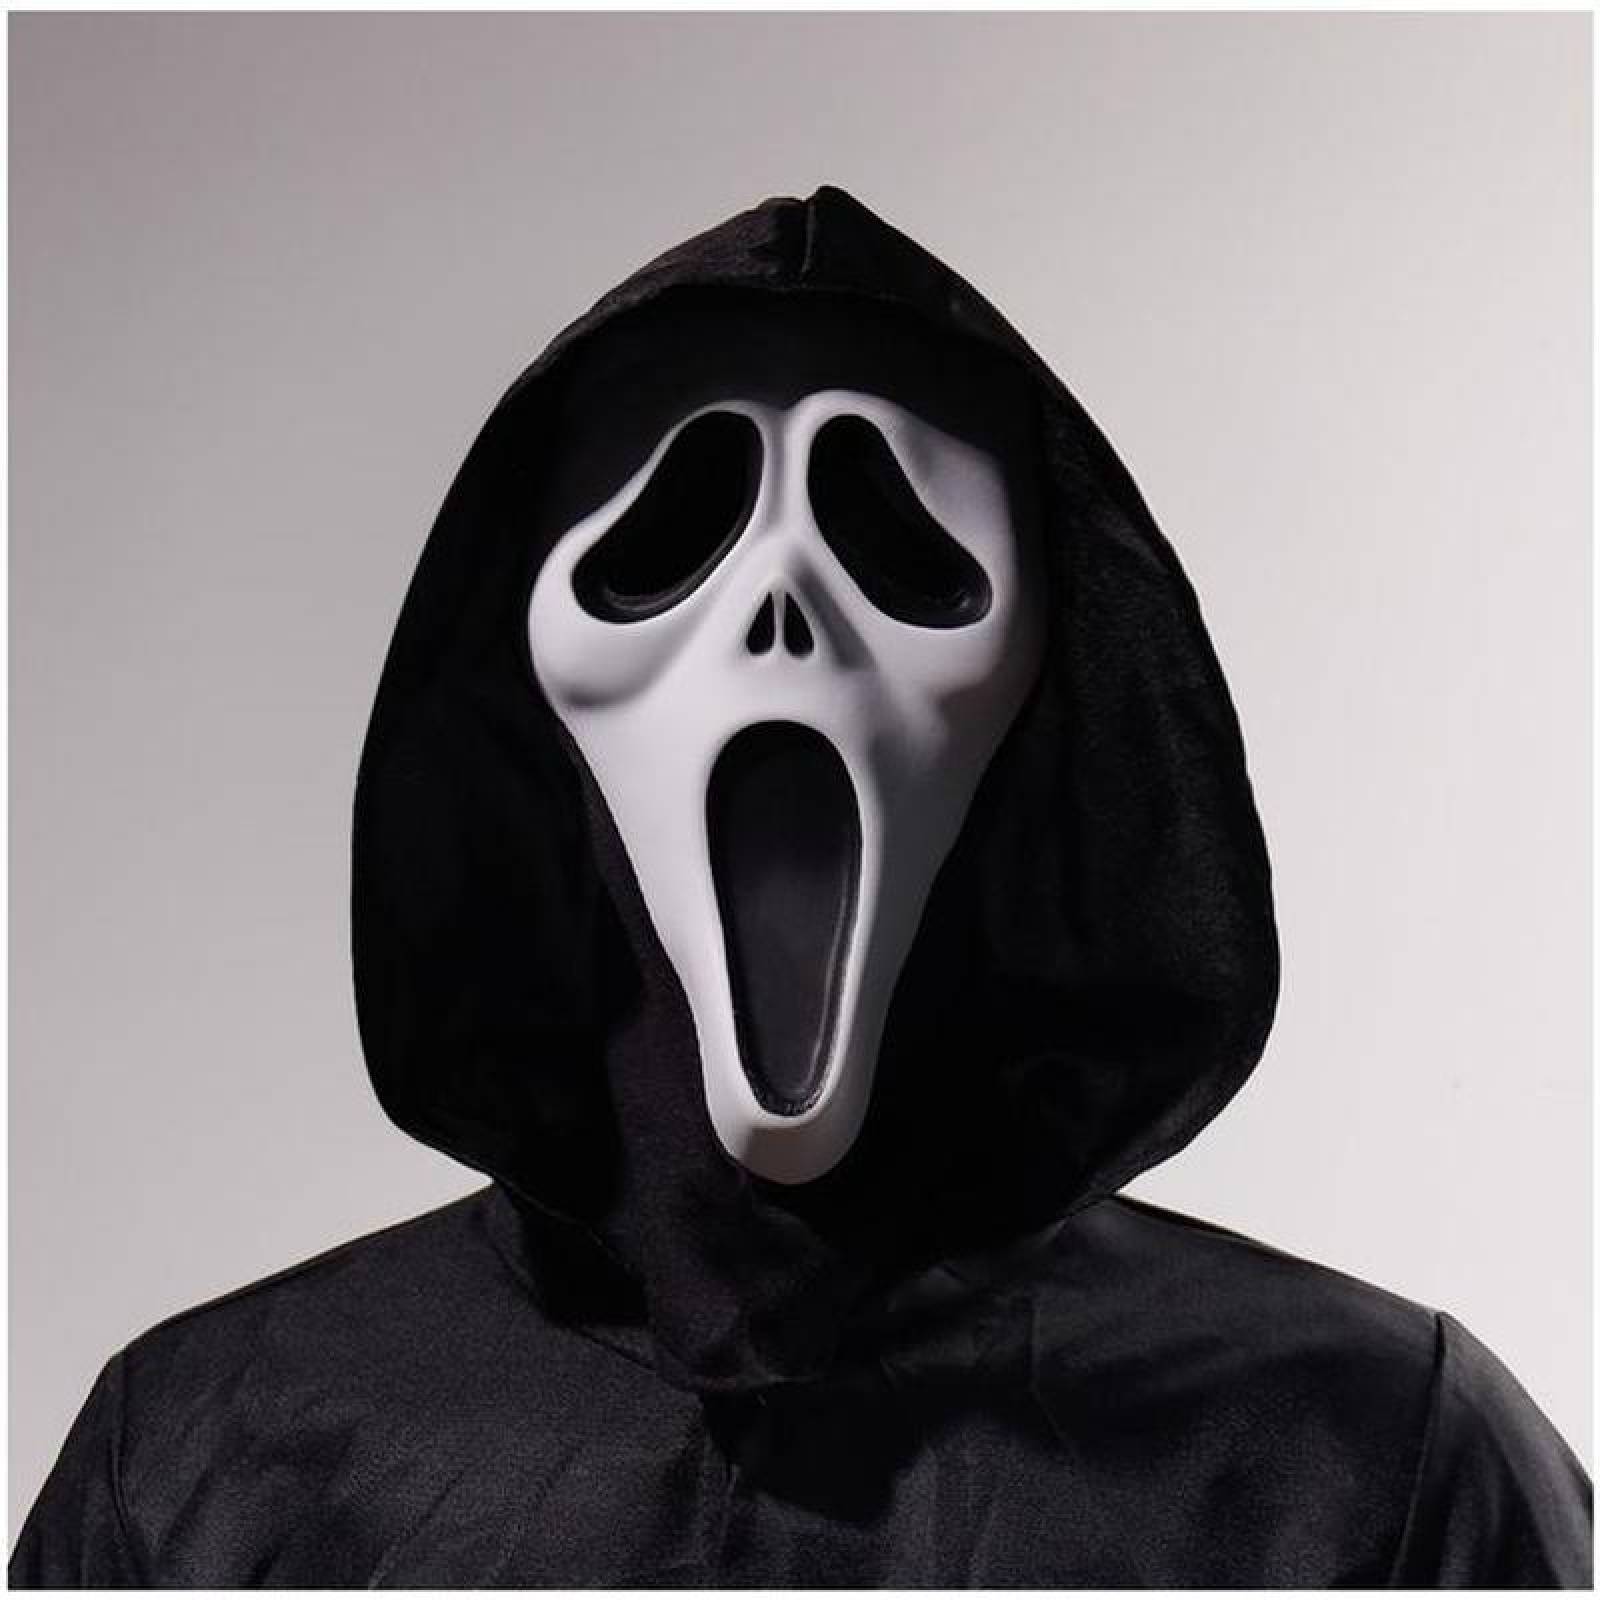 Máscara Transparente para Disfraz de Carnaval, Teatro o Halloween